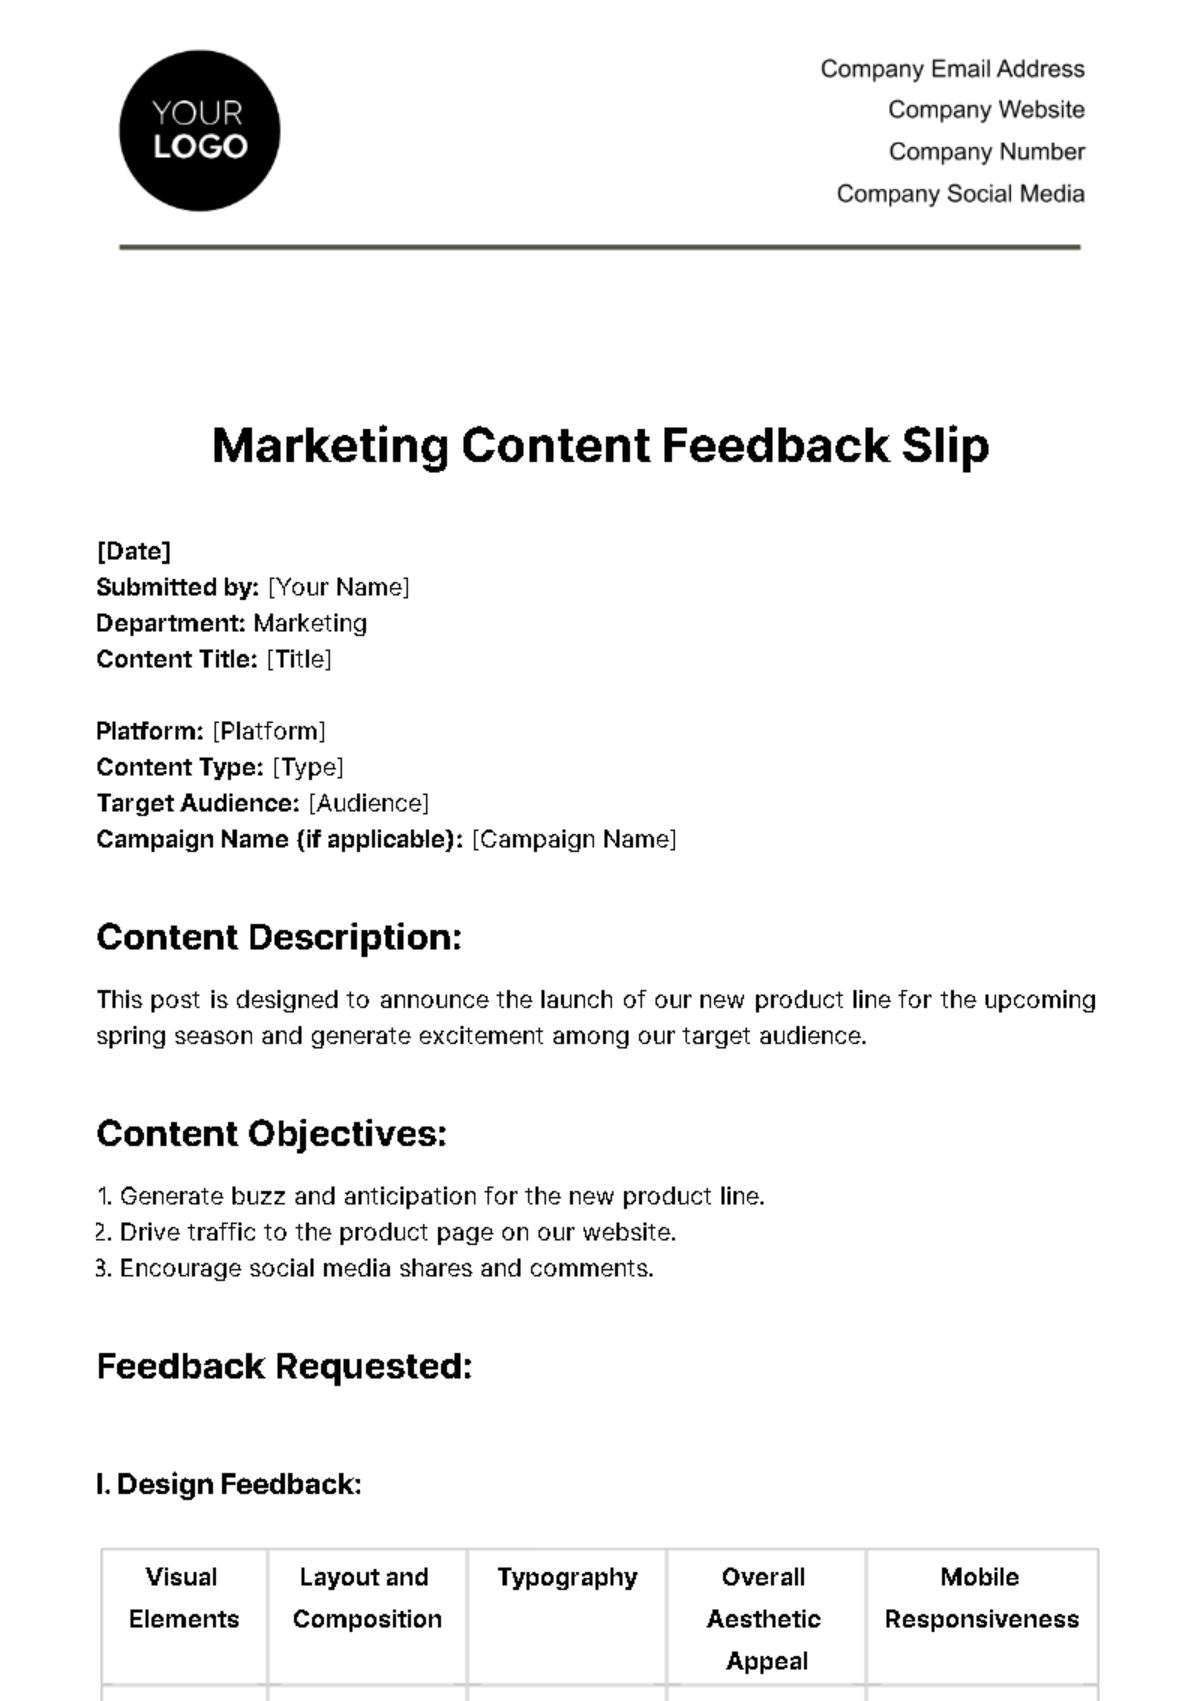 Free Marketing Content Feedback Slip Template